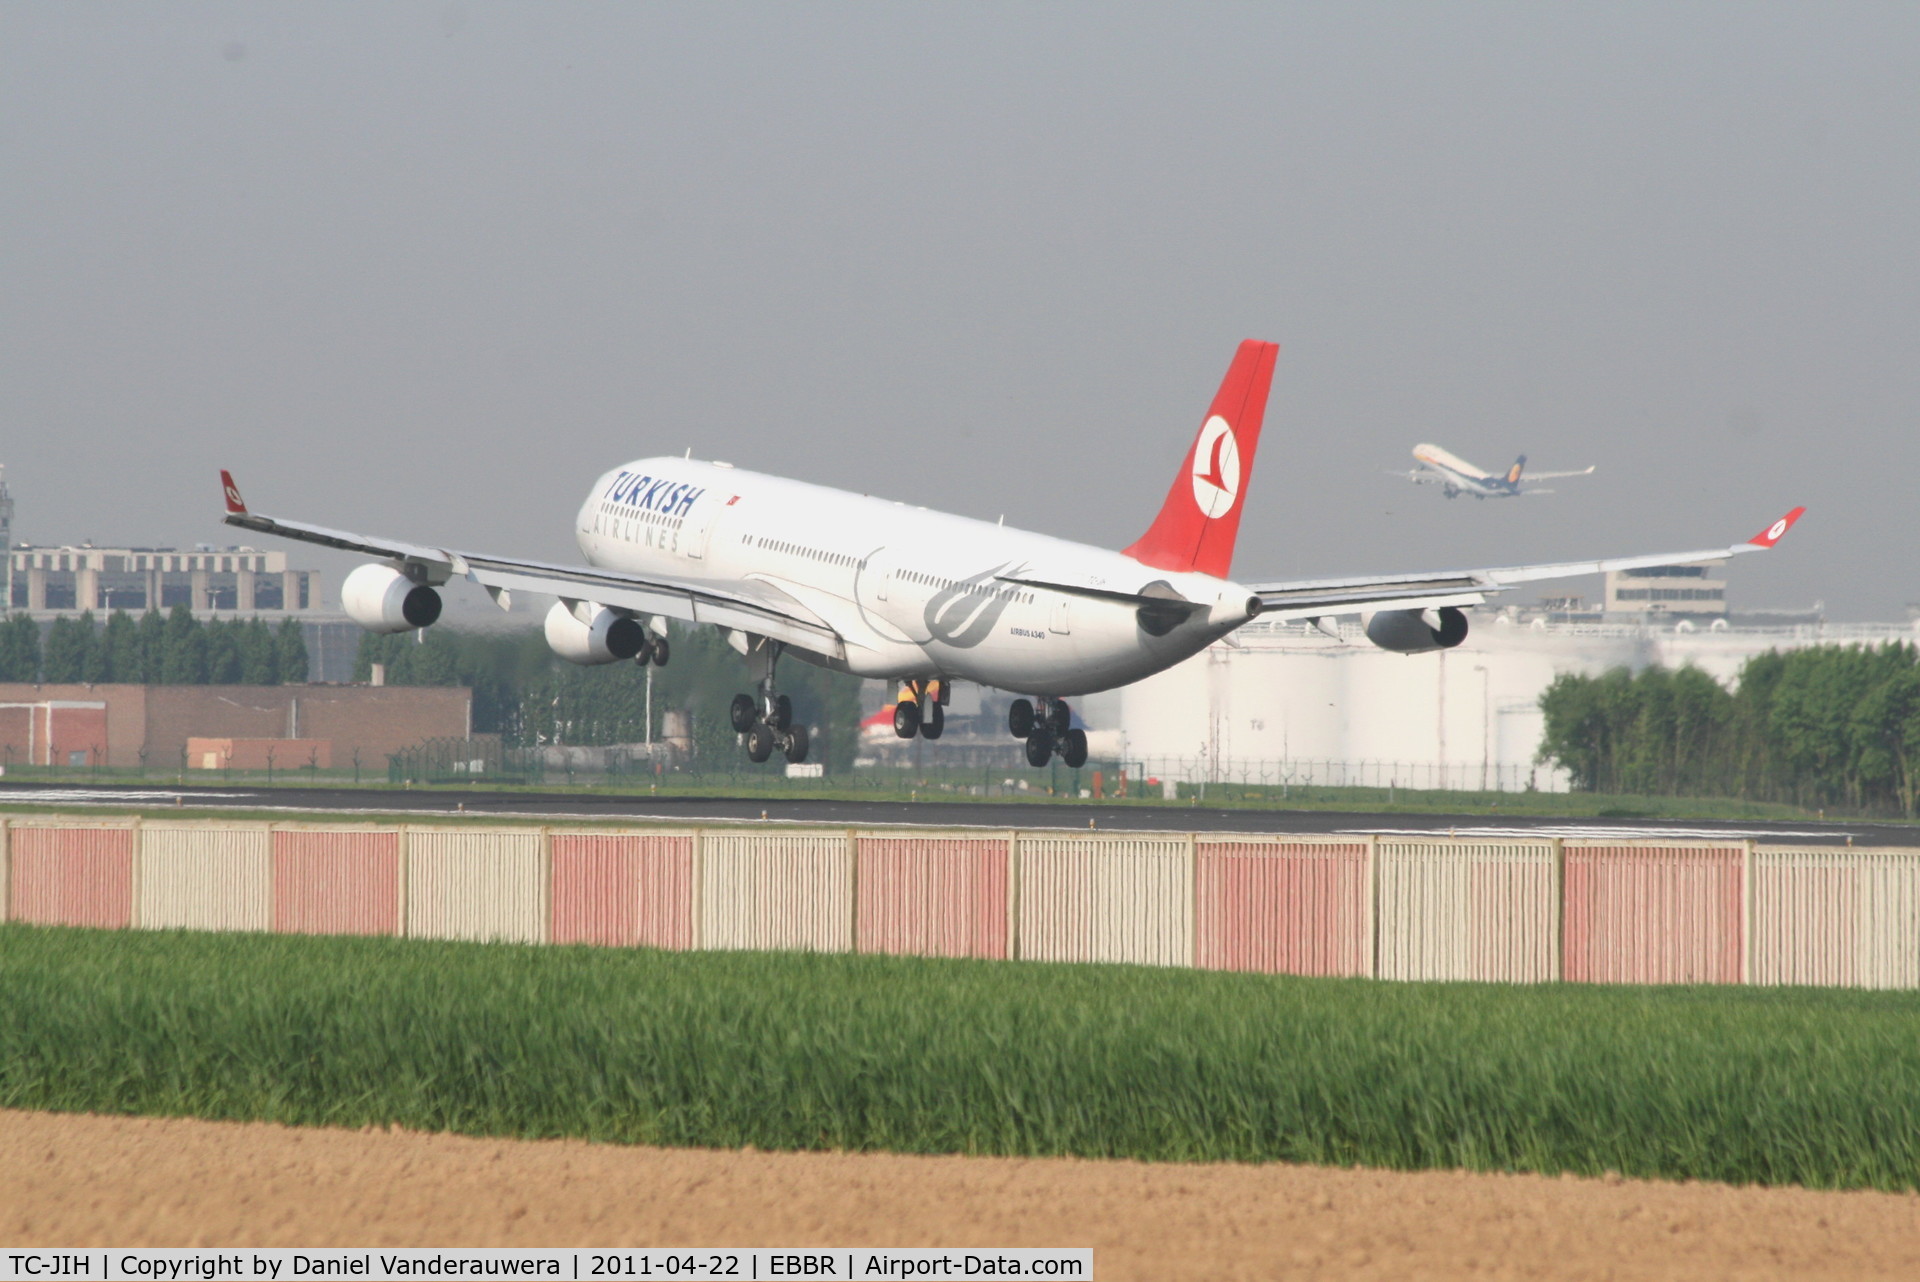 TC-JIH, 1999 Airbus A340-313 C/N 270, Flight TK1937 is landing on RWY 25L while flight 9W226 (A303-203  VT-JWH) is taking-off from RWY 25R